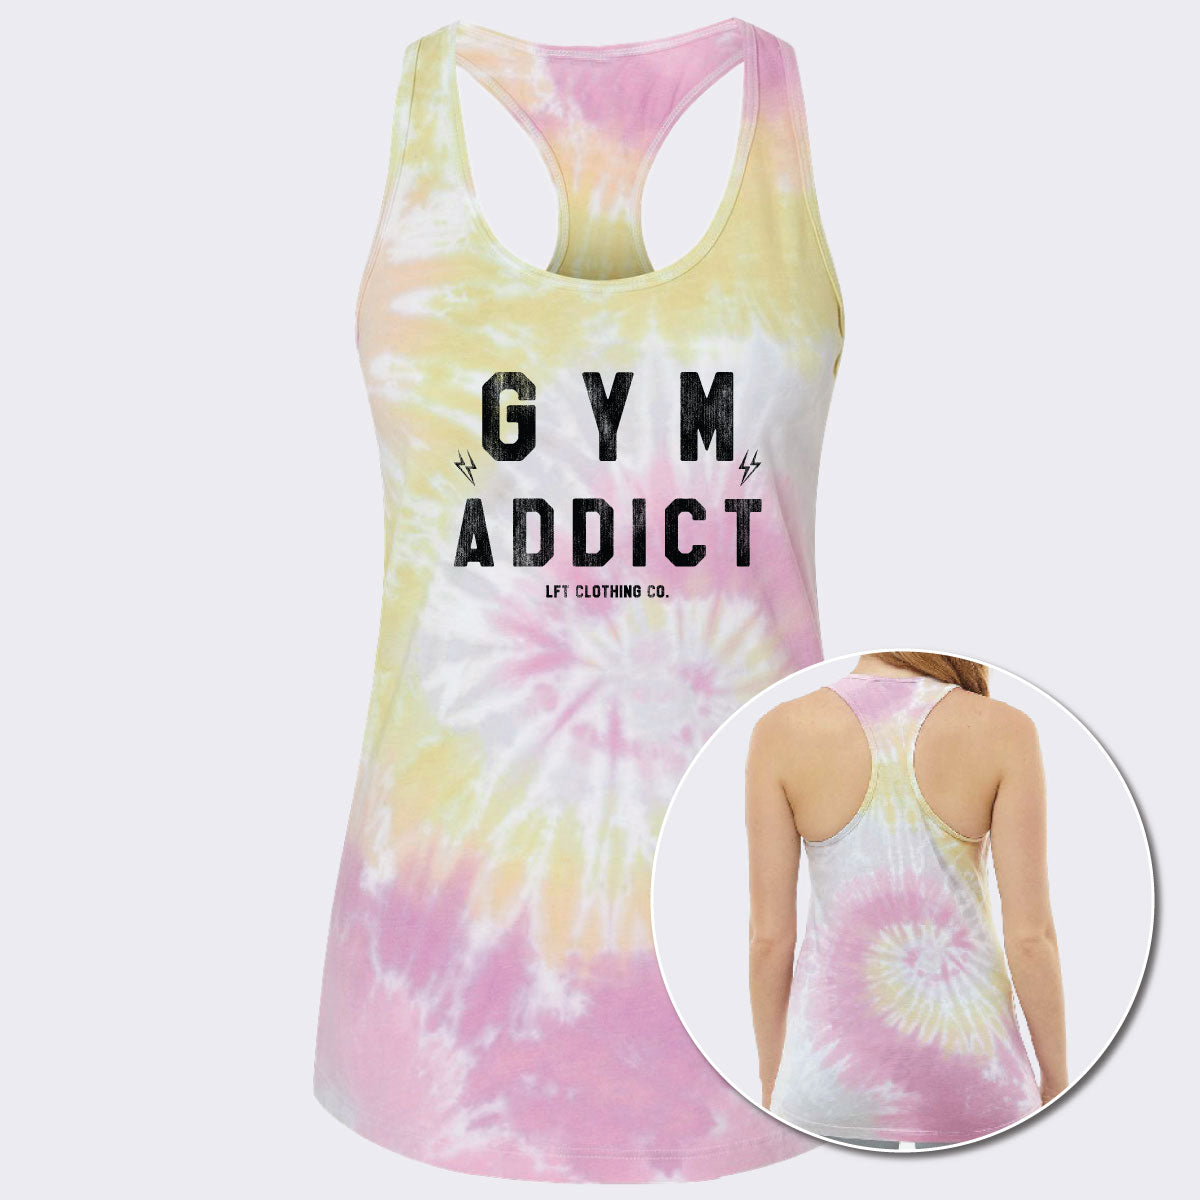 Gym Addict Tie-Dyed Racerback Tank Top